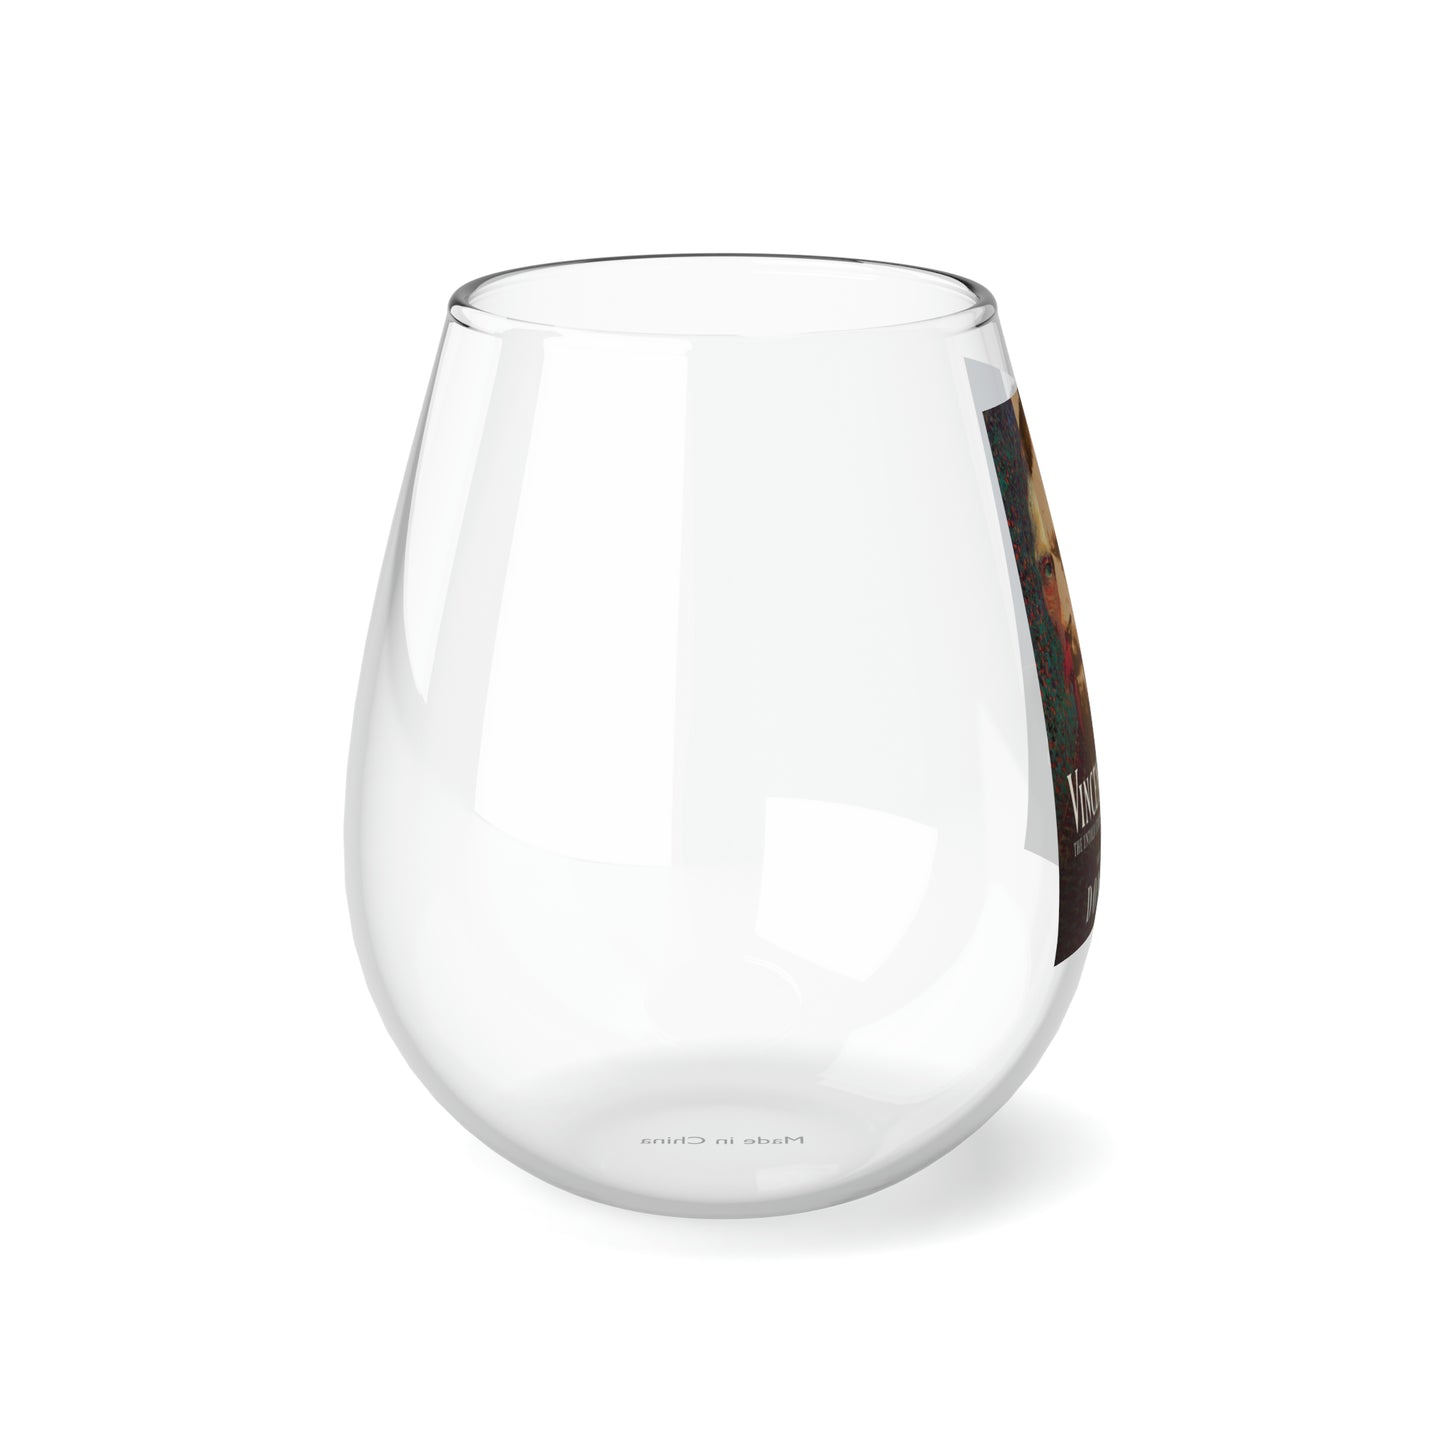 Vincent's Women - Stemless Wine Glass, 11.75oz